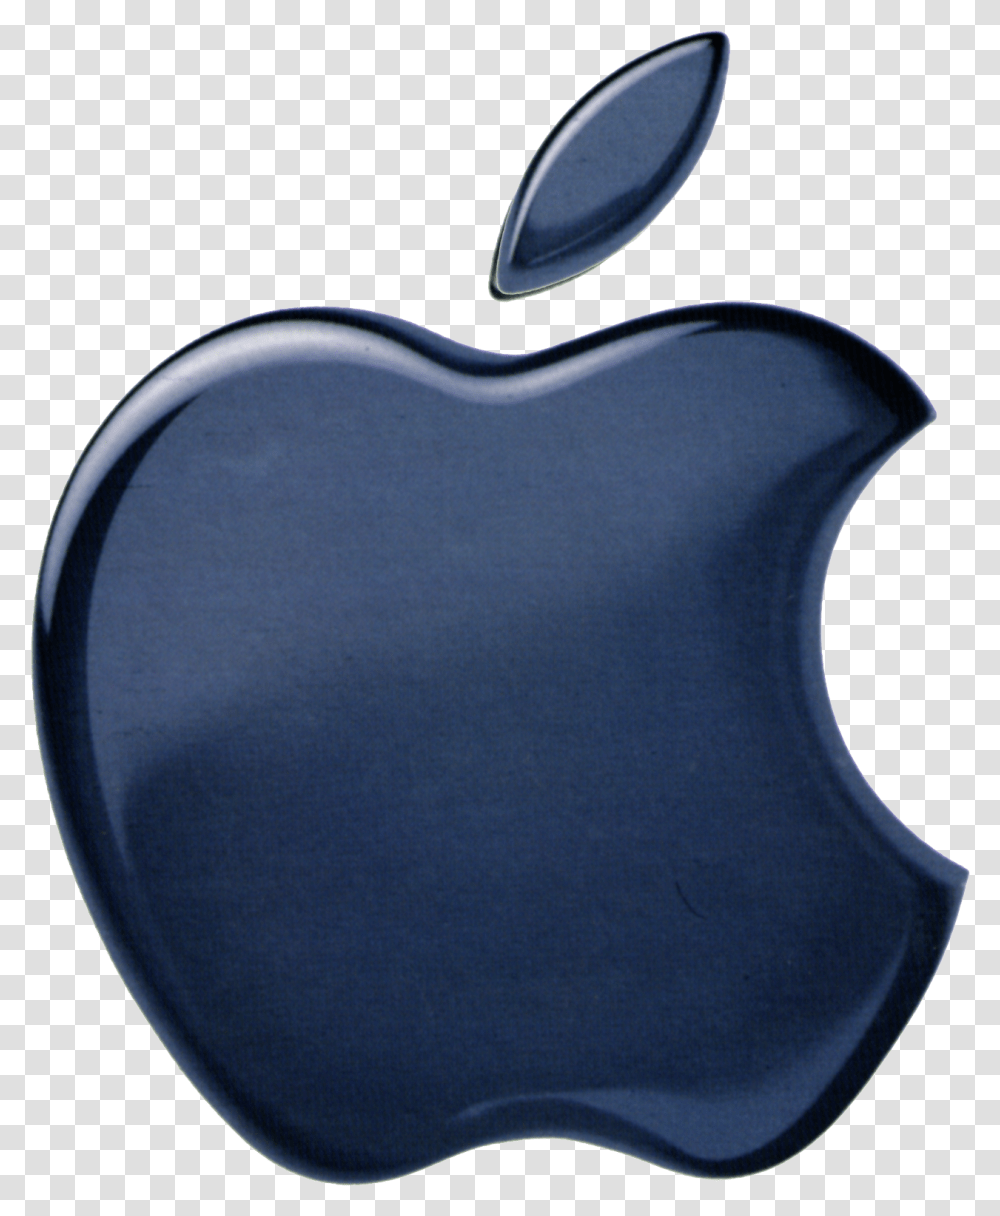 Apple Logo Black Apple Company, Cushion, Baseball Cap, Hat Transparent Png